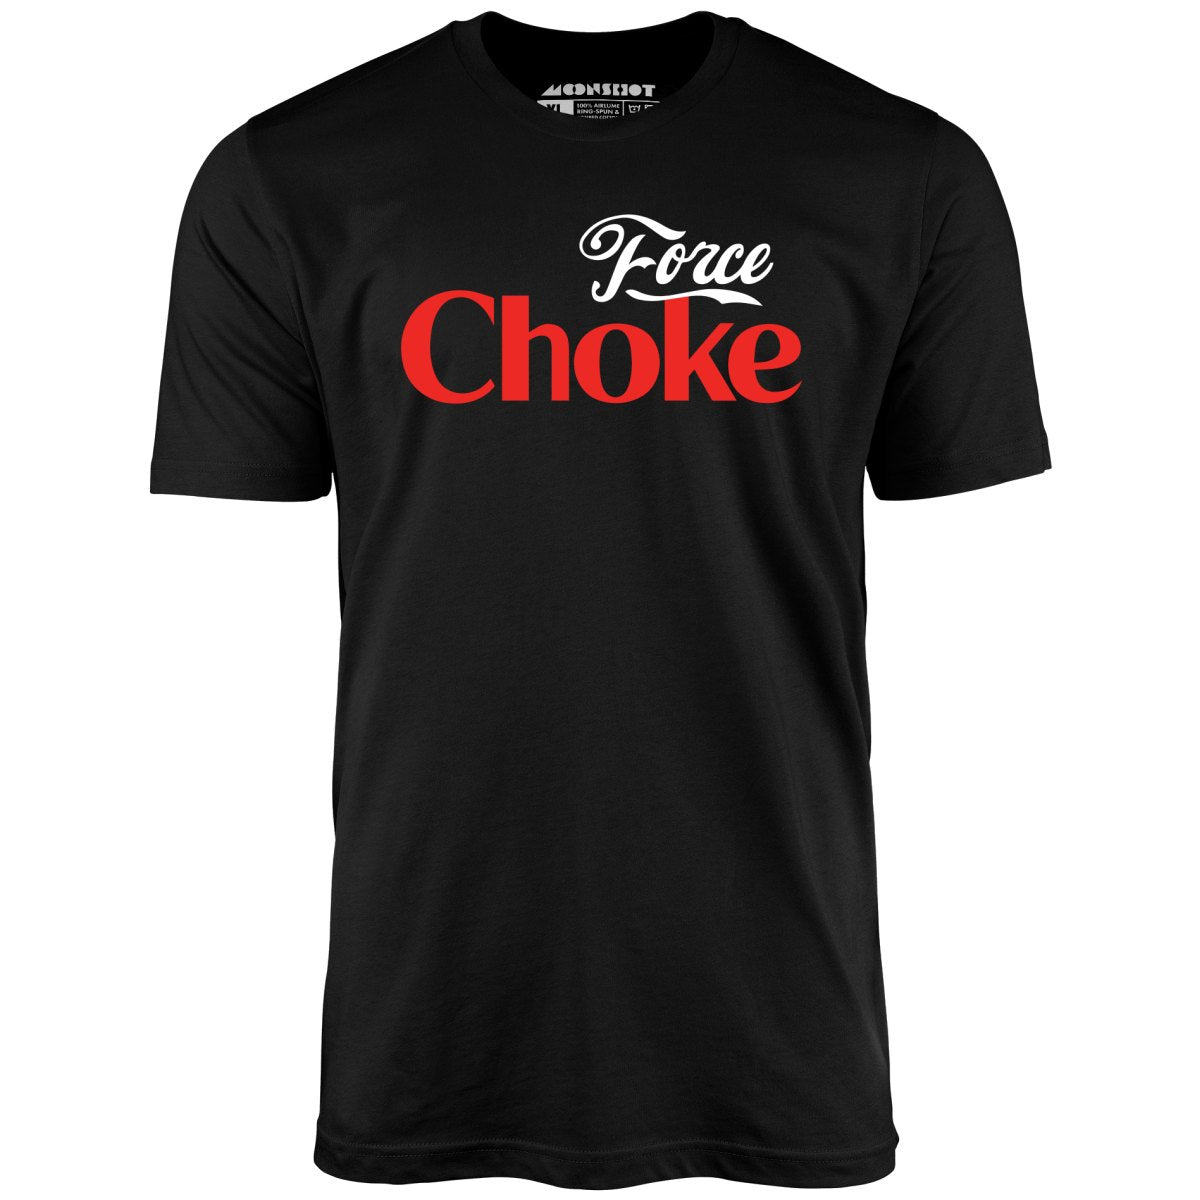 Force Choke - Unisex T-Shirt